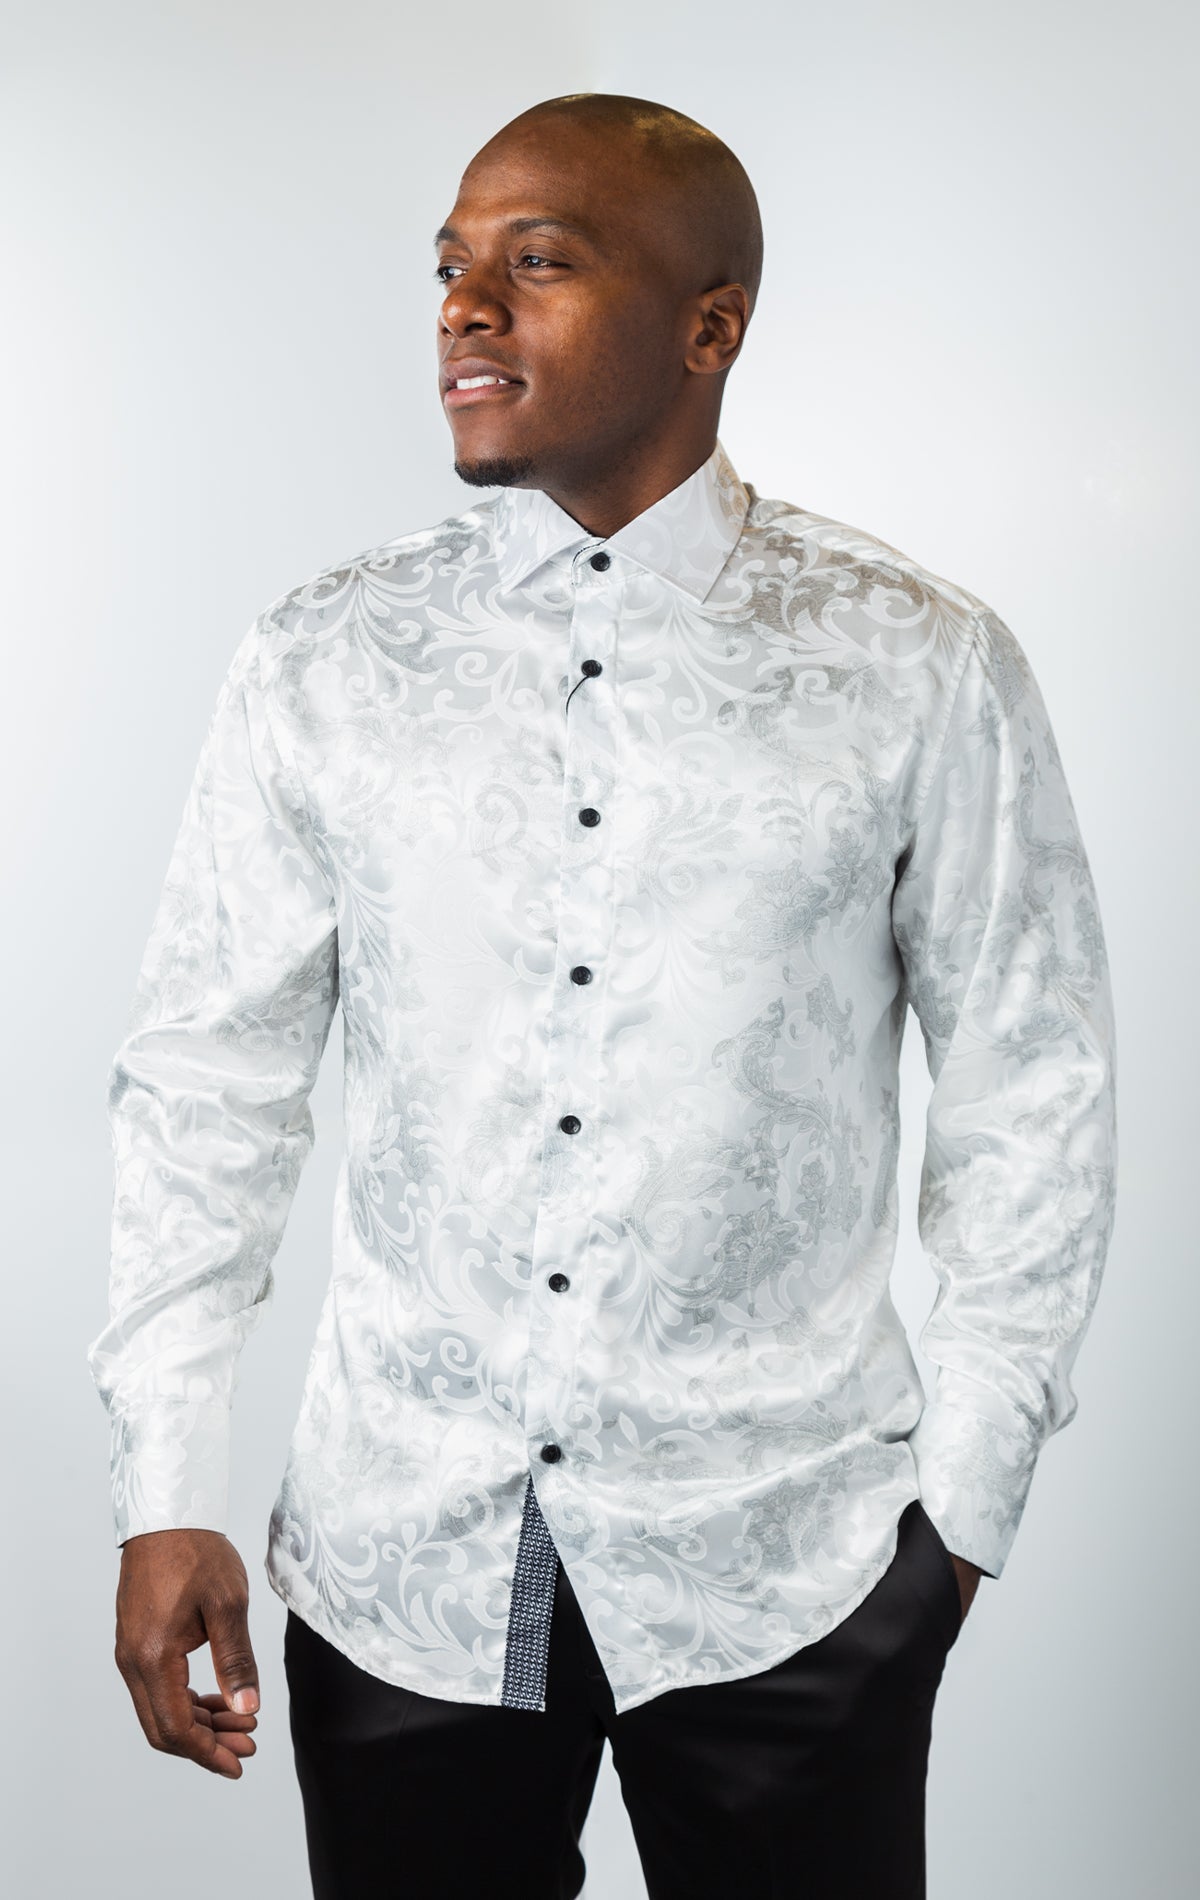 Long sleeve button up dress shirt with seamless pattern